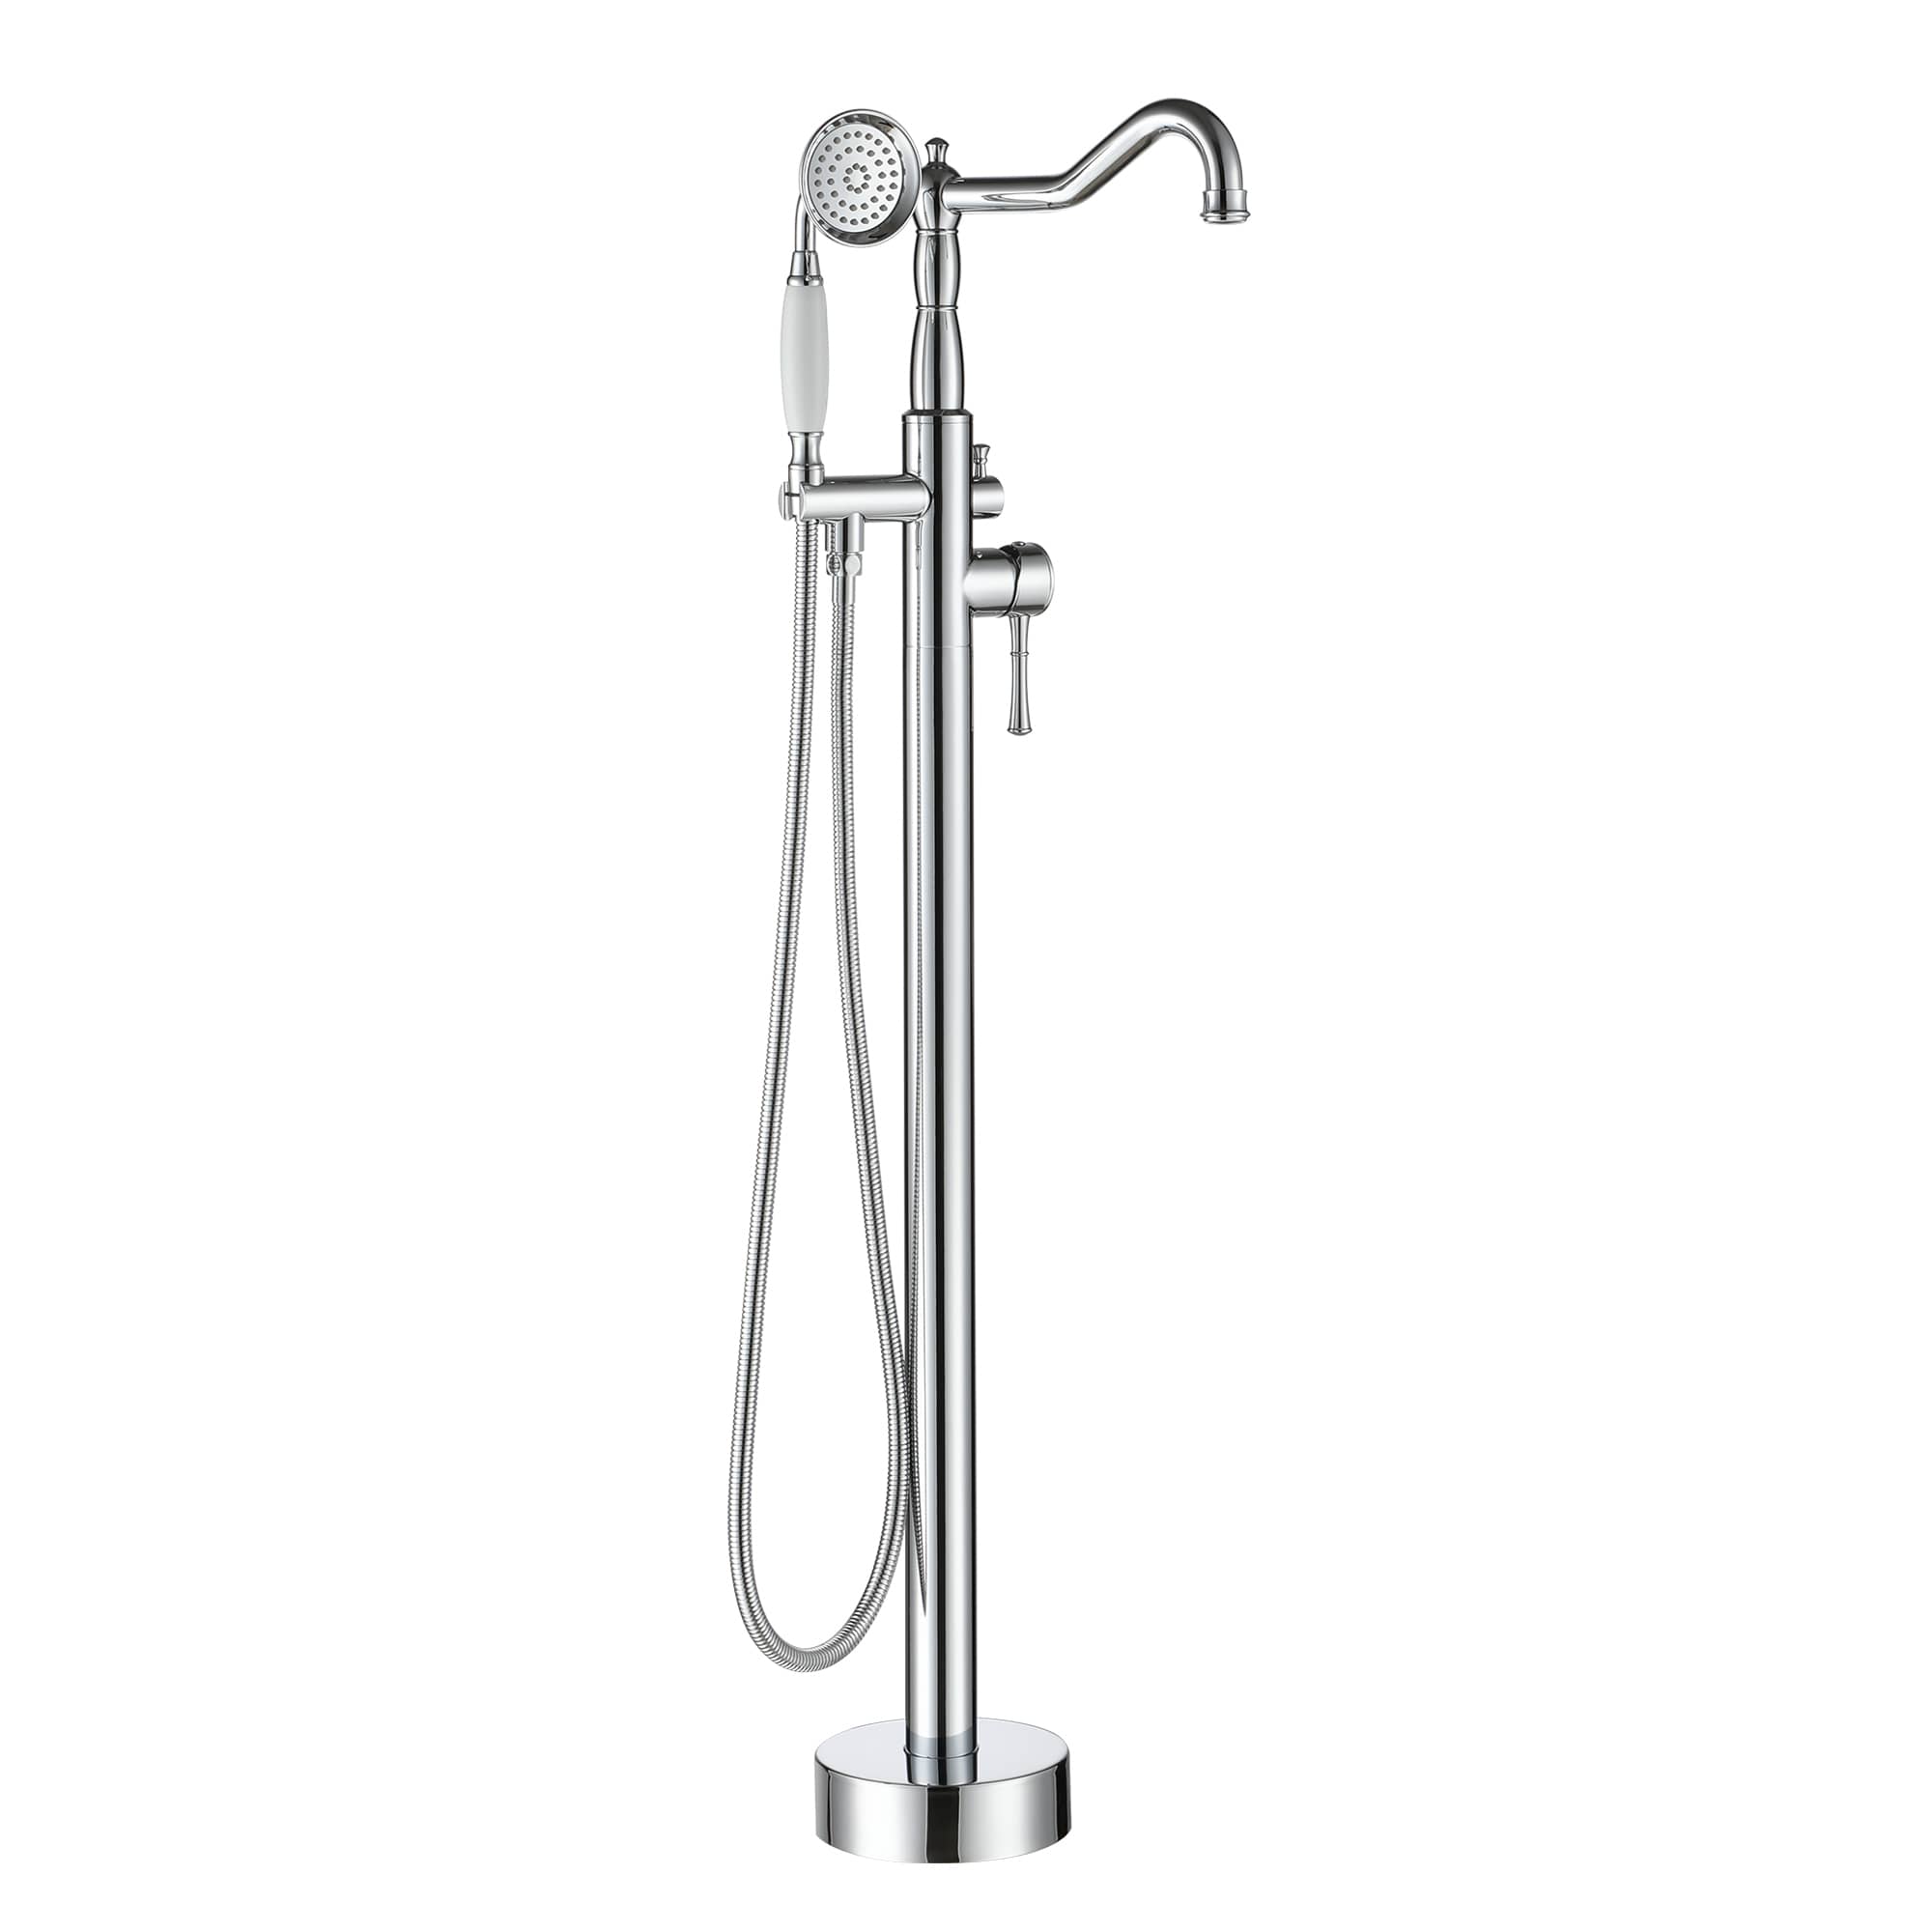 CASAINC Multiple Color 1-Handle Commercial Freestanding Bathtub Faucet with Hand Shower, Brass